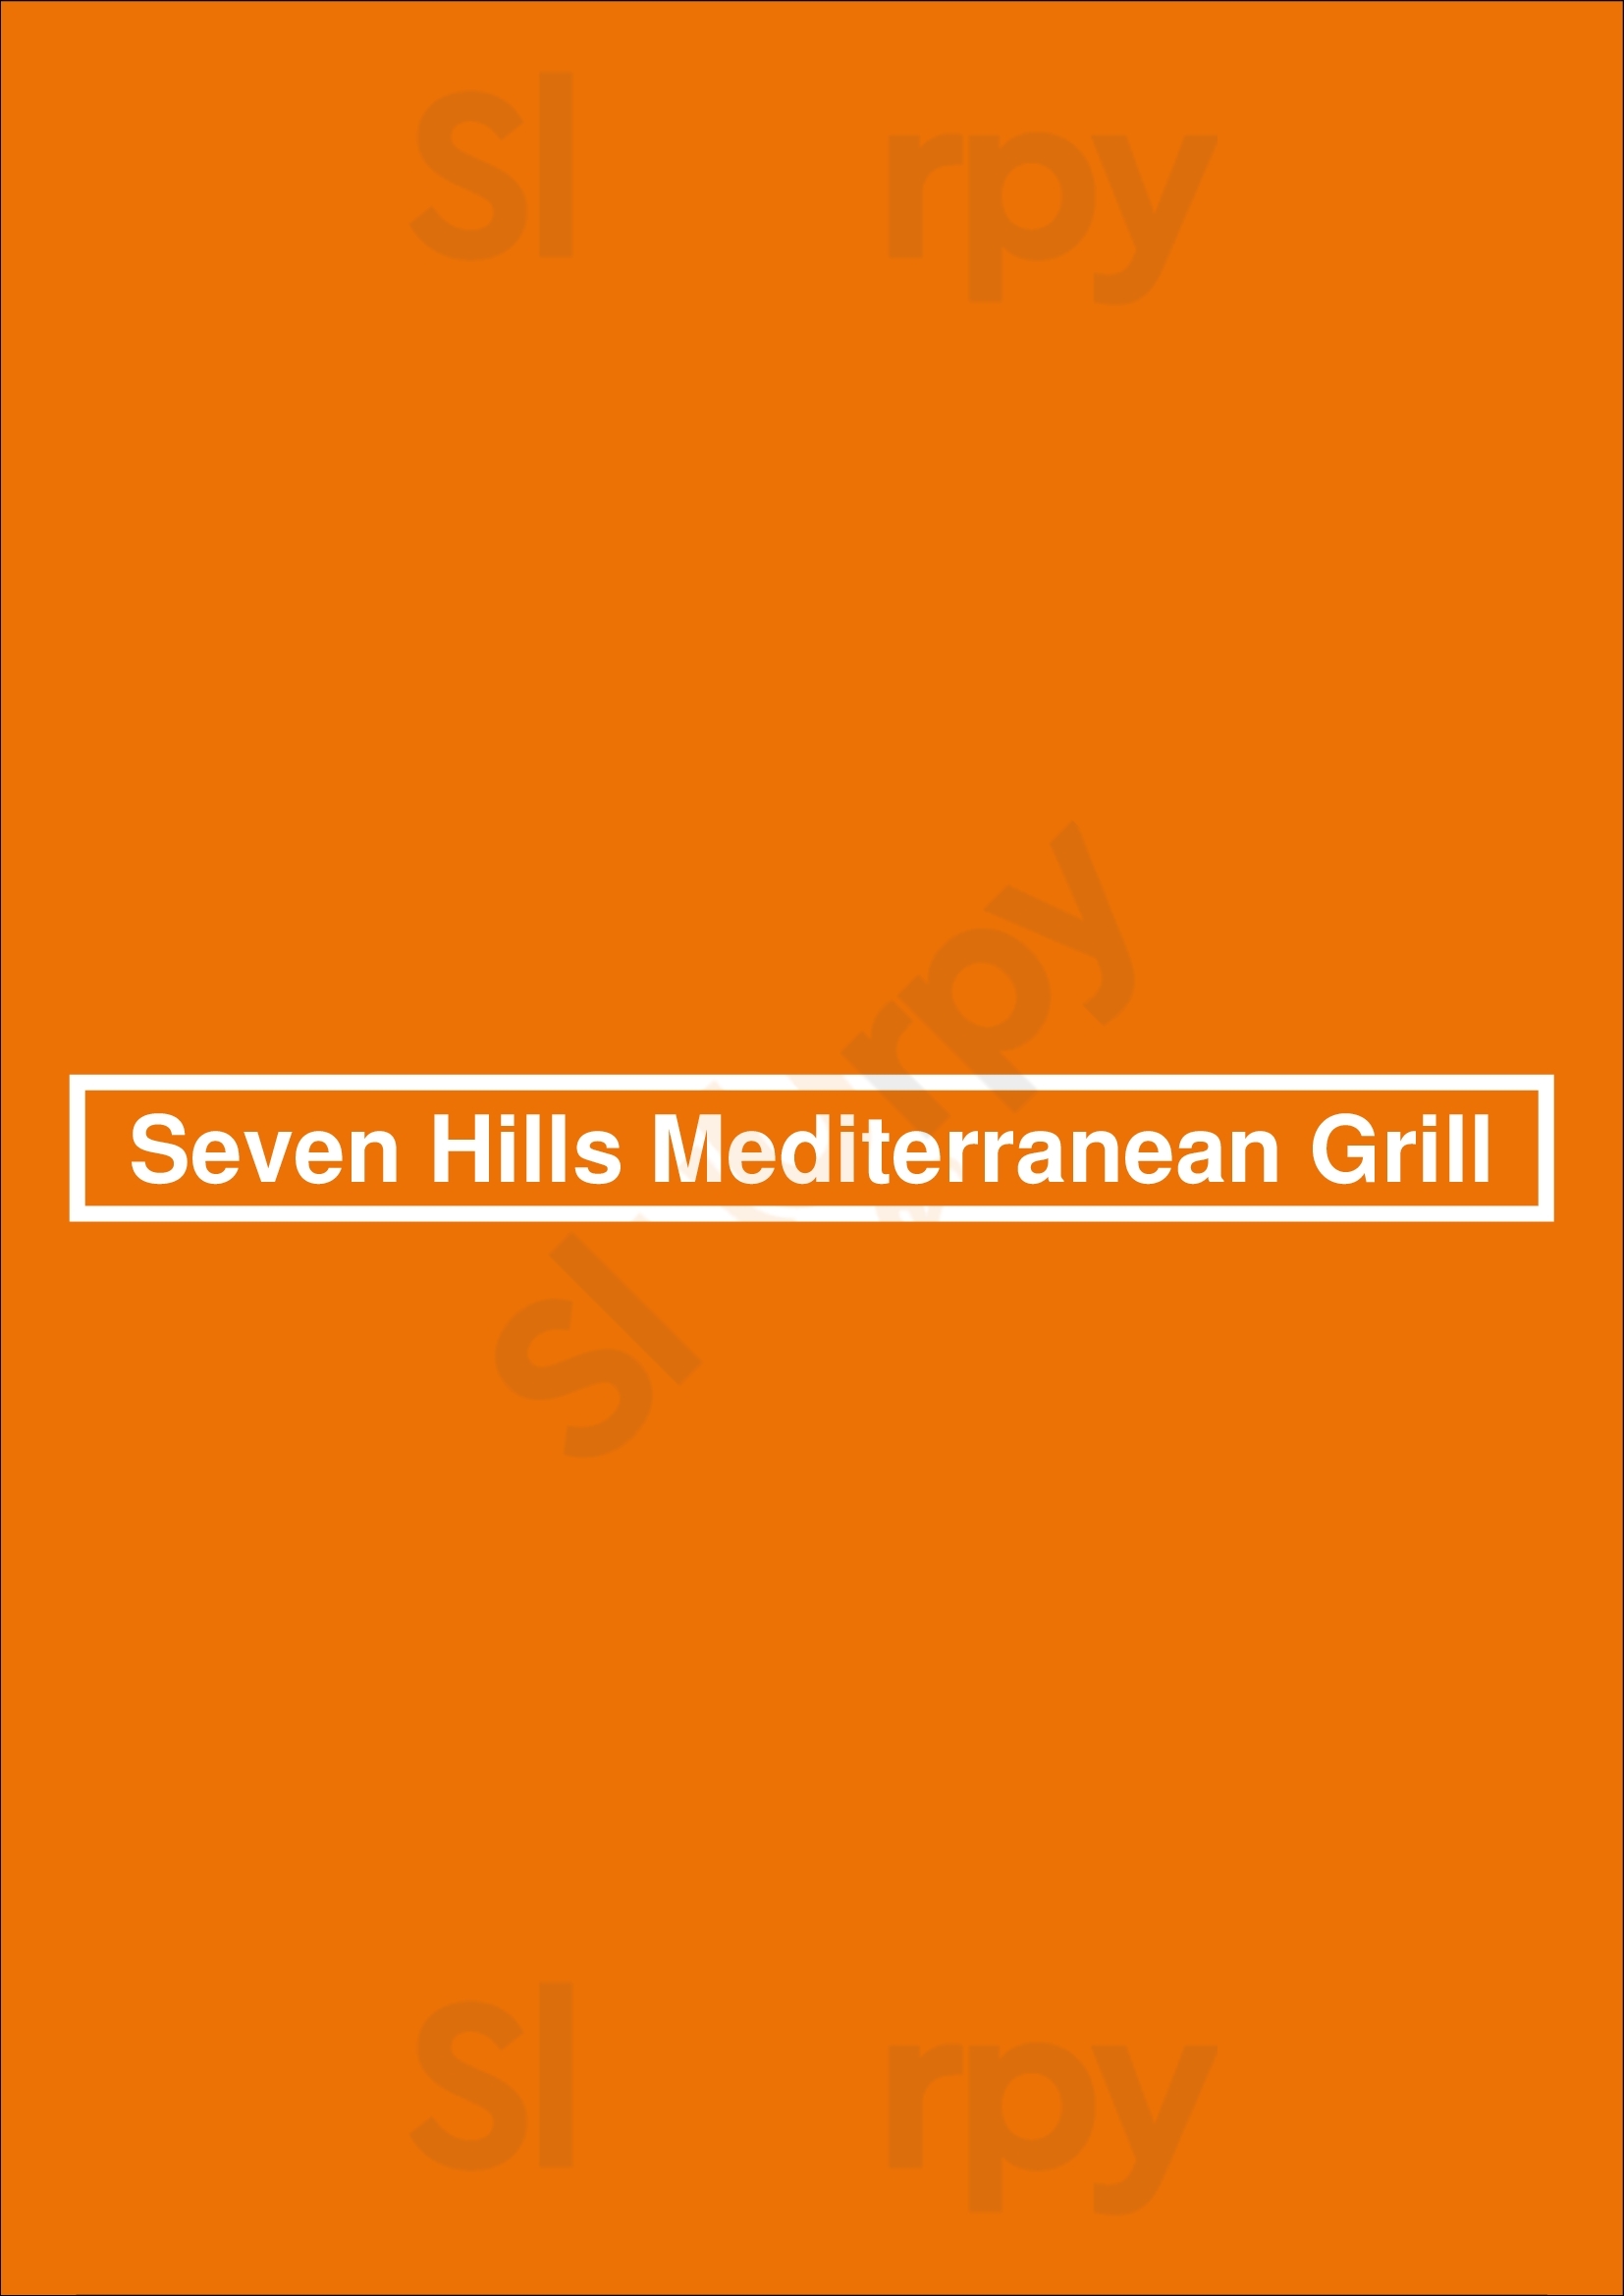 Seven Hills Mediterranean Grill New York City Menu - 1